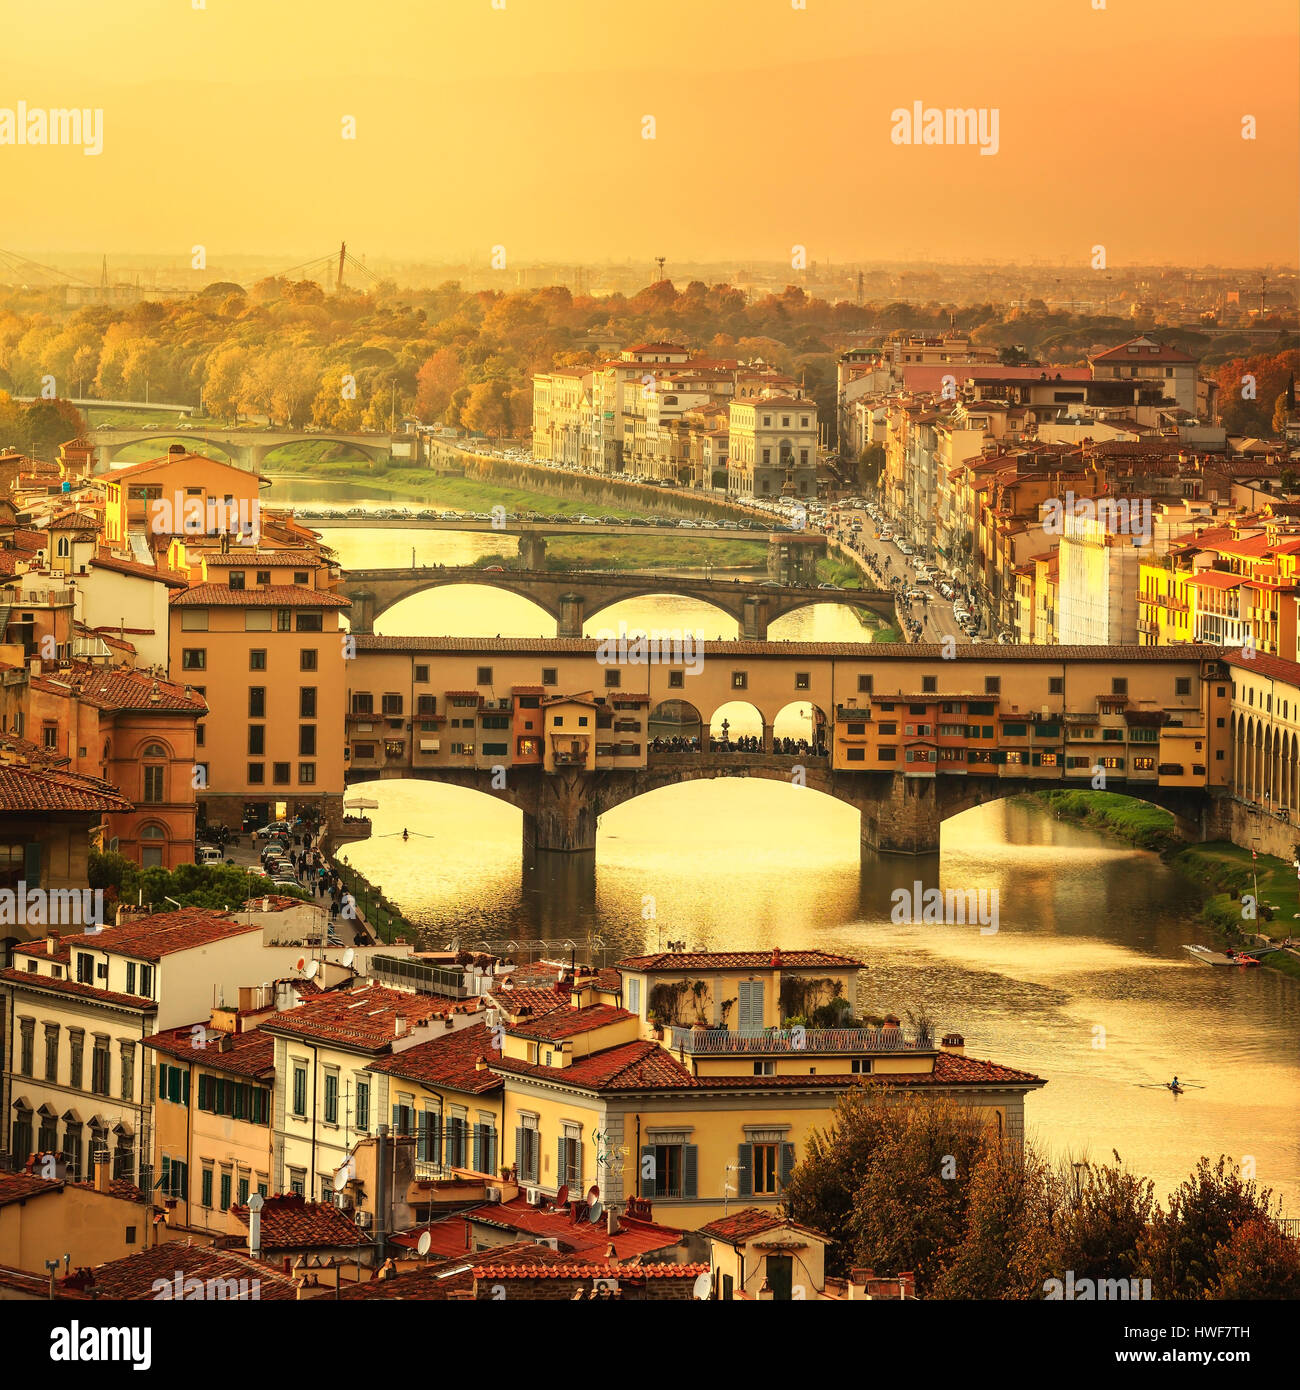 Florenz oder Firenze Sonnenuntergang Ponte Vecchio Brücke. Panoramablick vom Michelangelo Park entfernt. Toskana, Italien Stockfoto